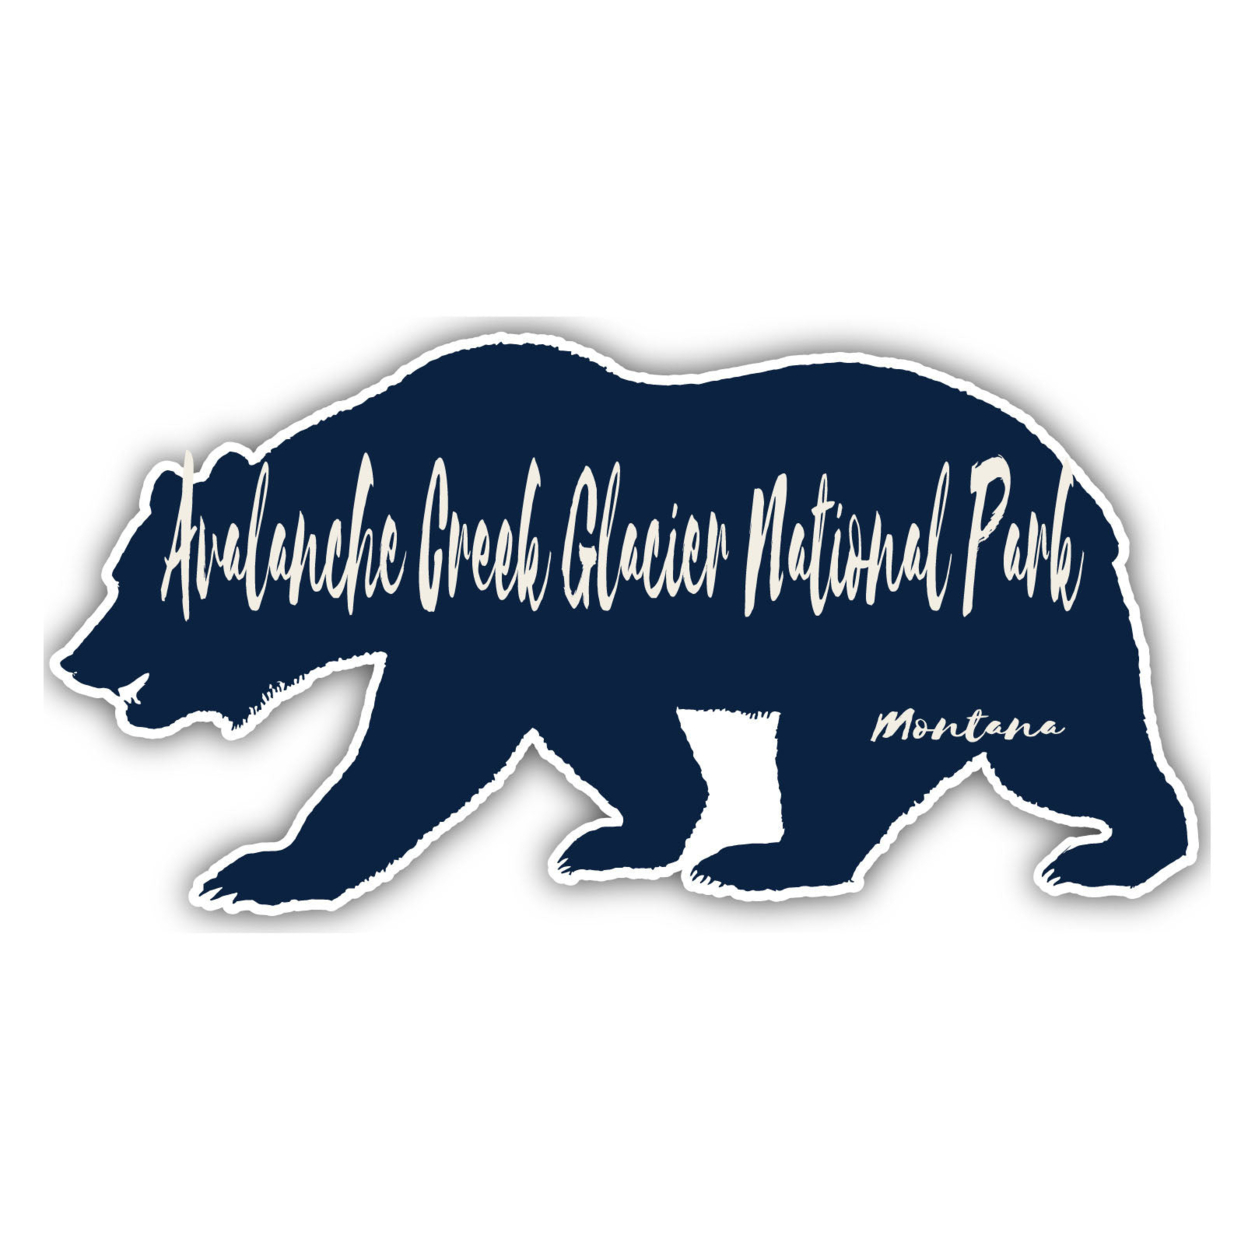 Avalanche Creek Glacier National Park Montana Souvenir Decorative Stickers (Choose Theme And Size) - 4-Pack, 8-Inch, Bear